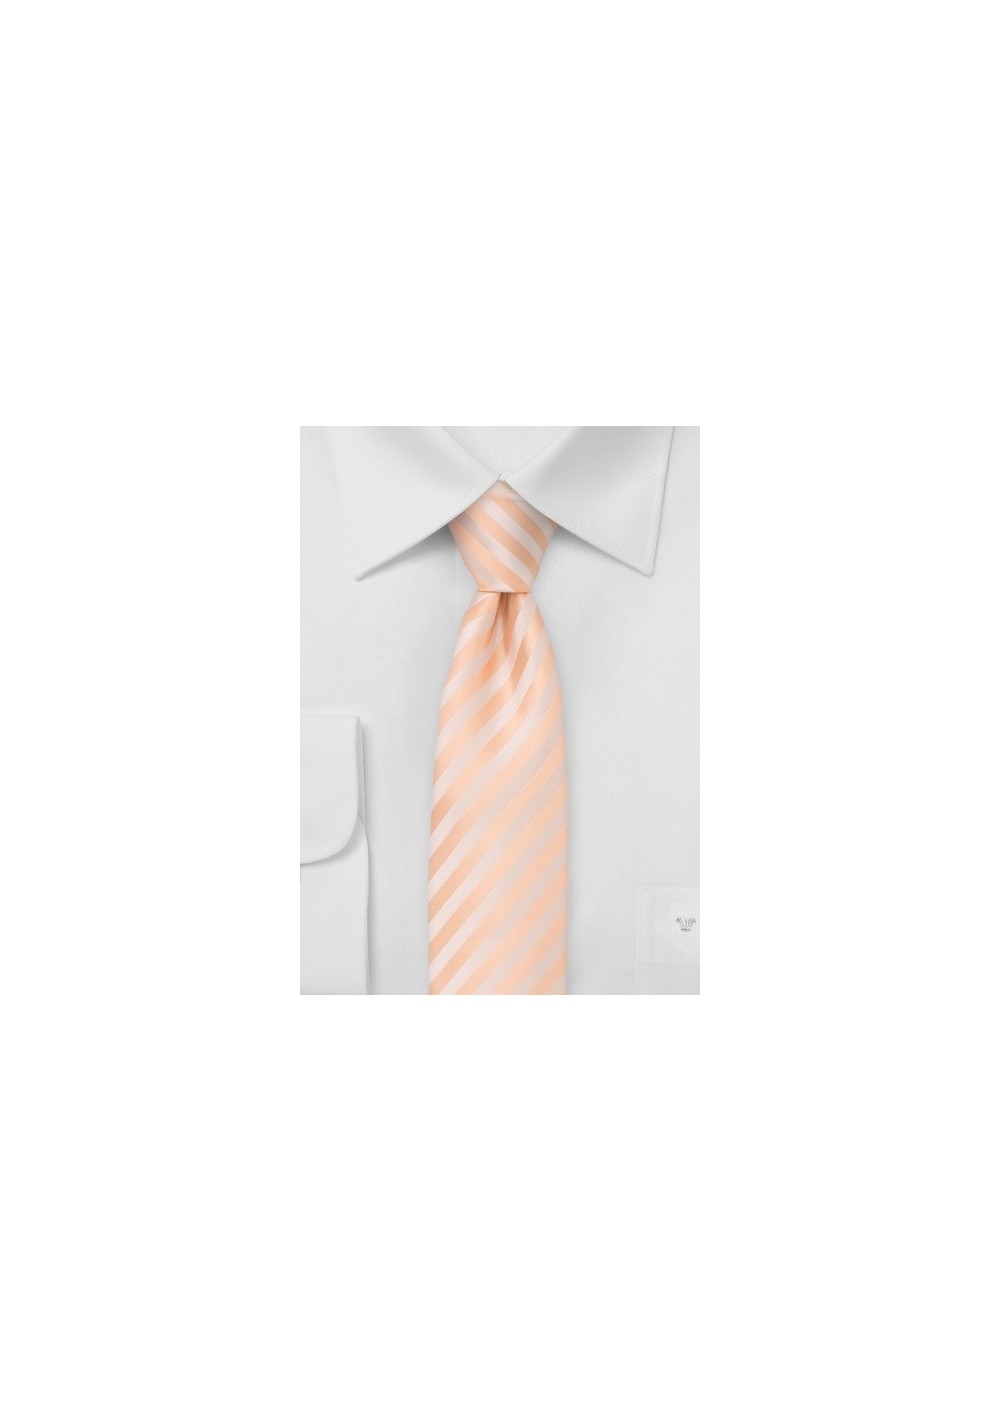 Striped Skinny Tie in Peach